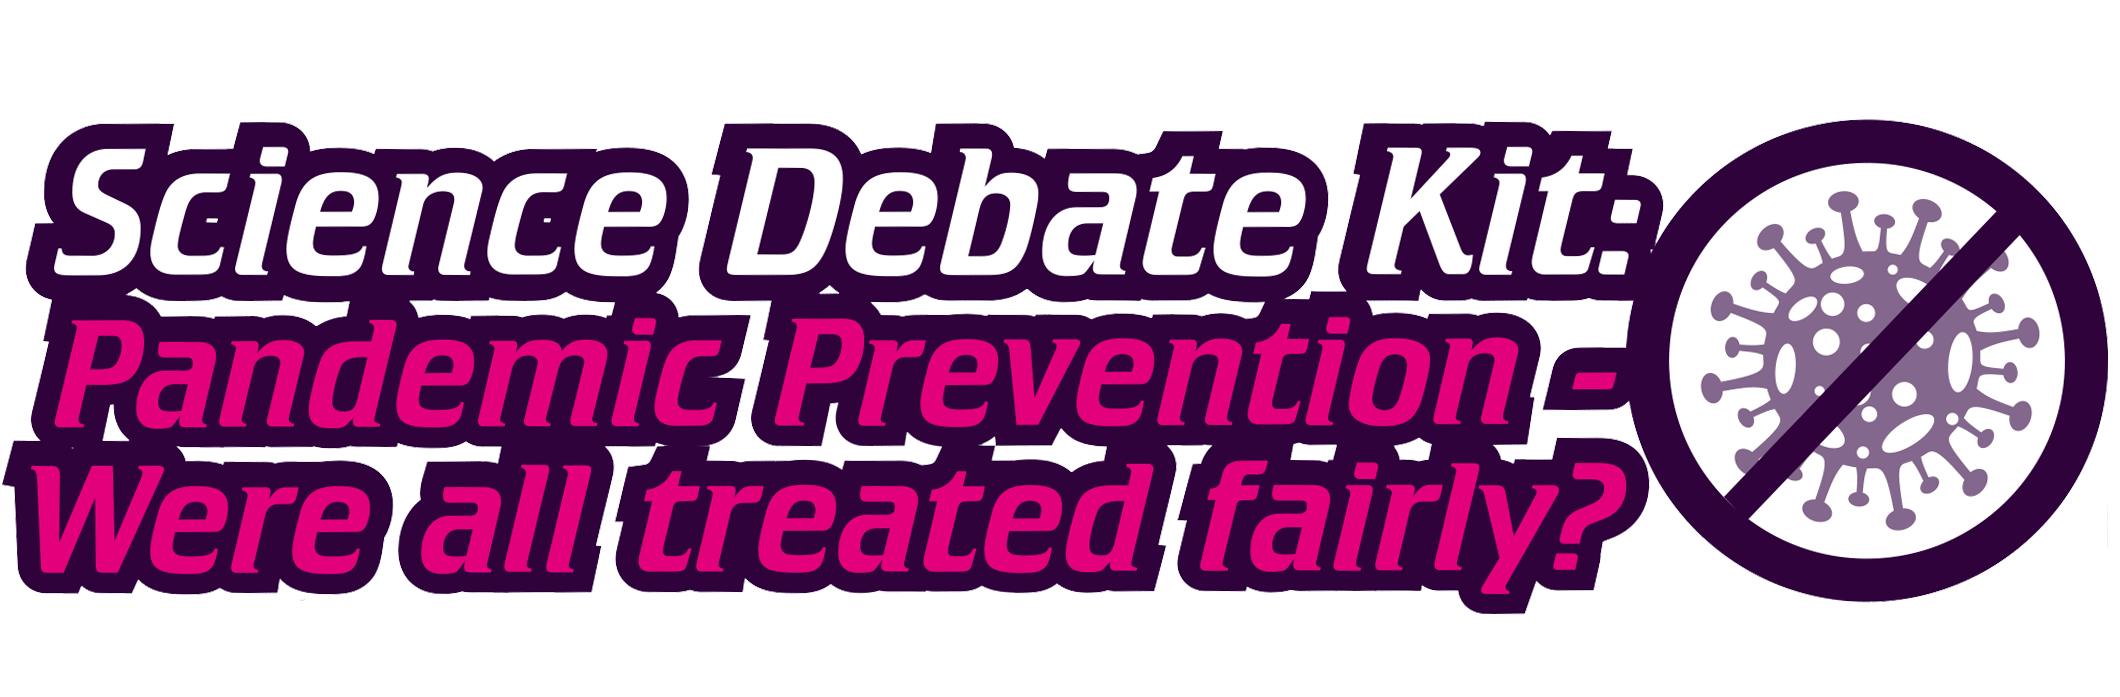 Pandemic Prevention Debate Kit